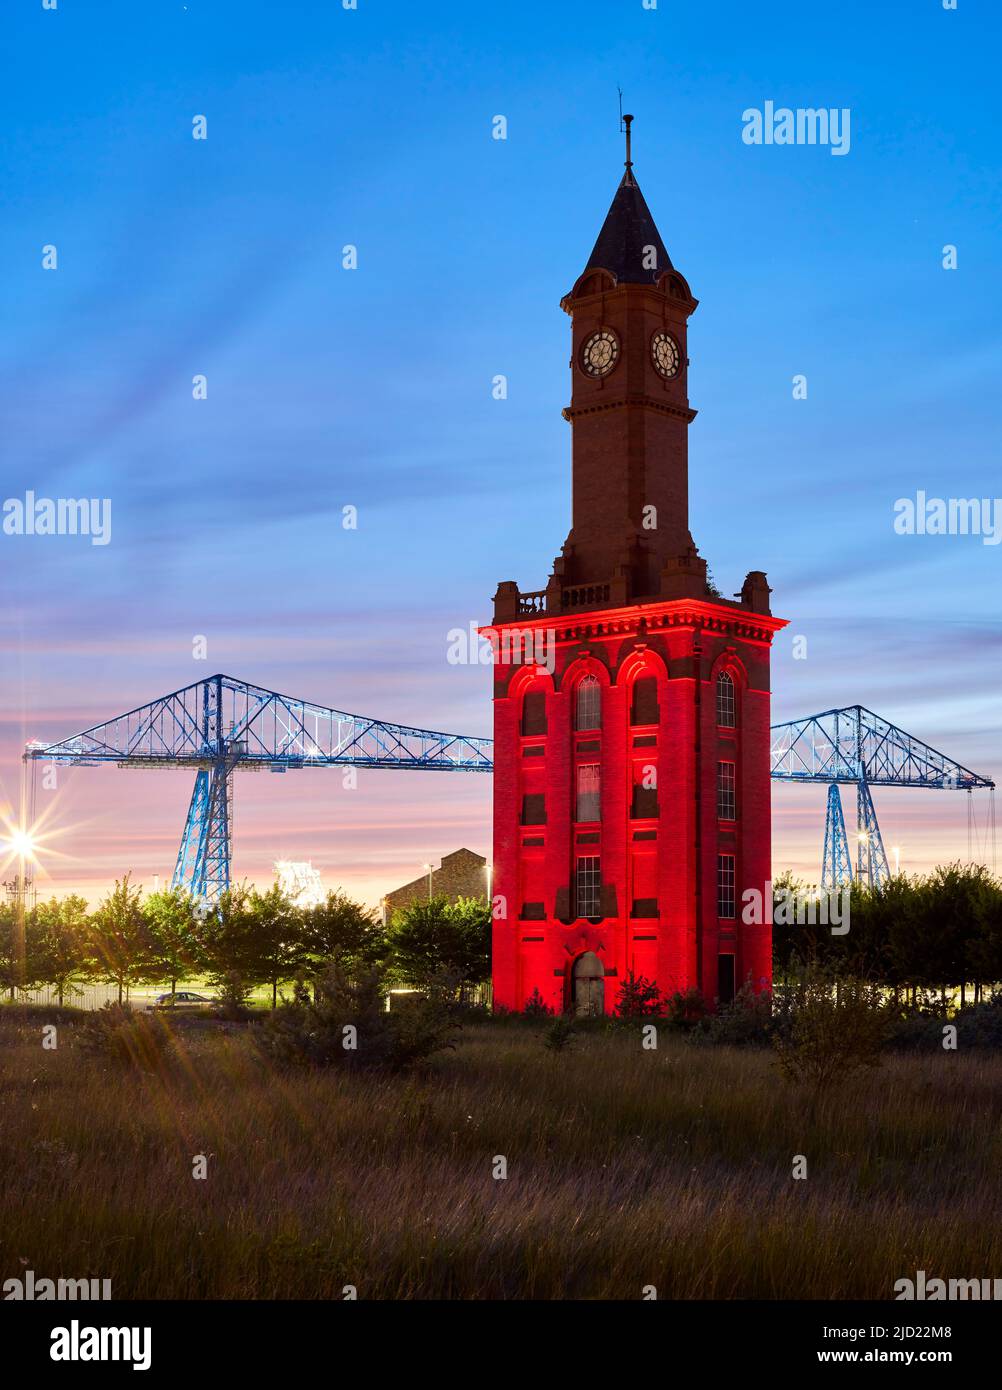 Middlesbrough docks clock tower Stock Photo